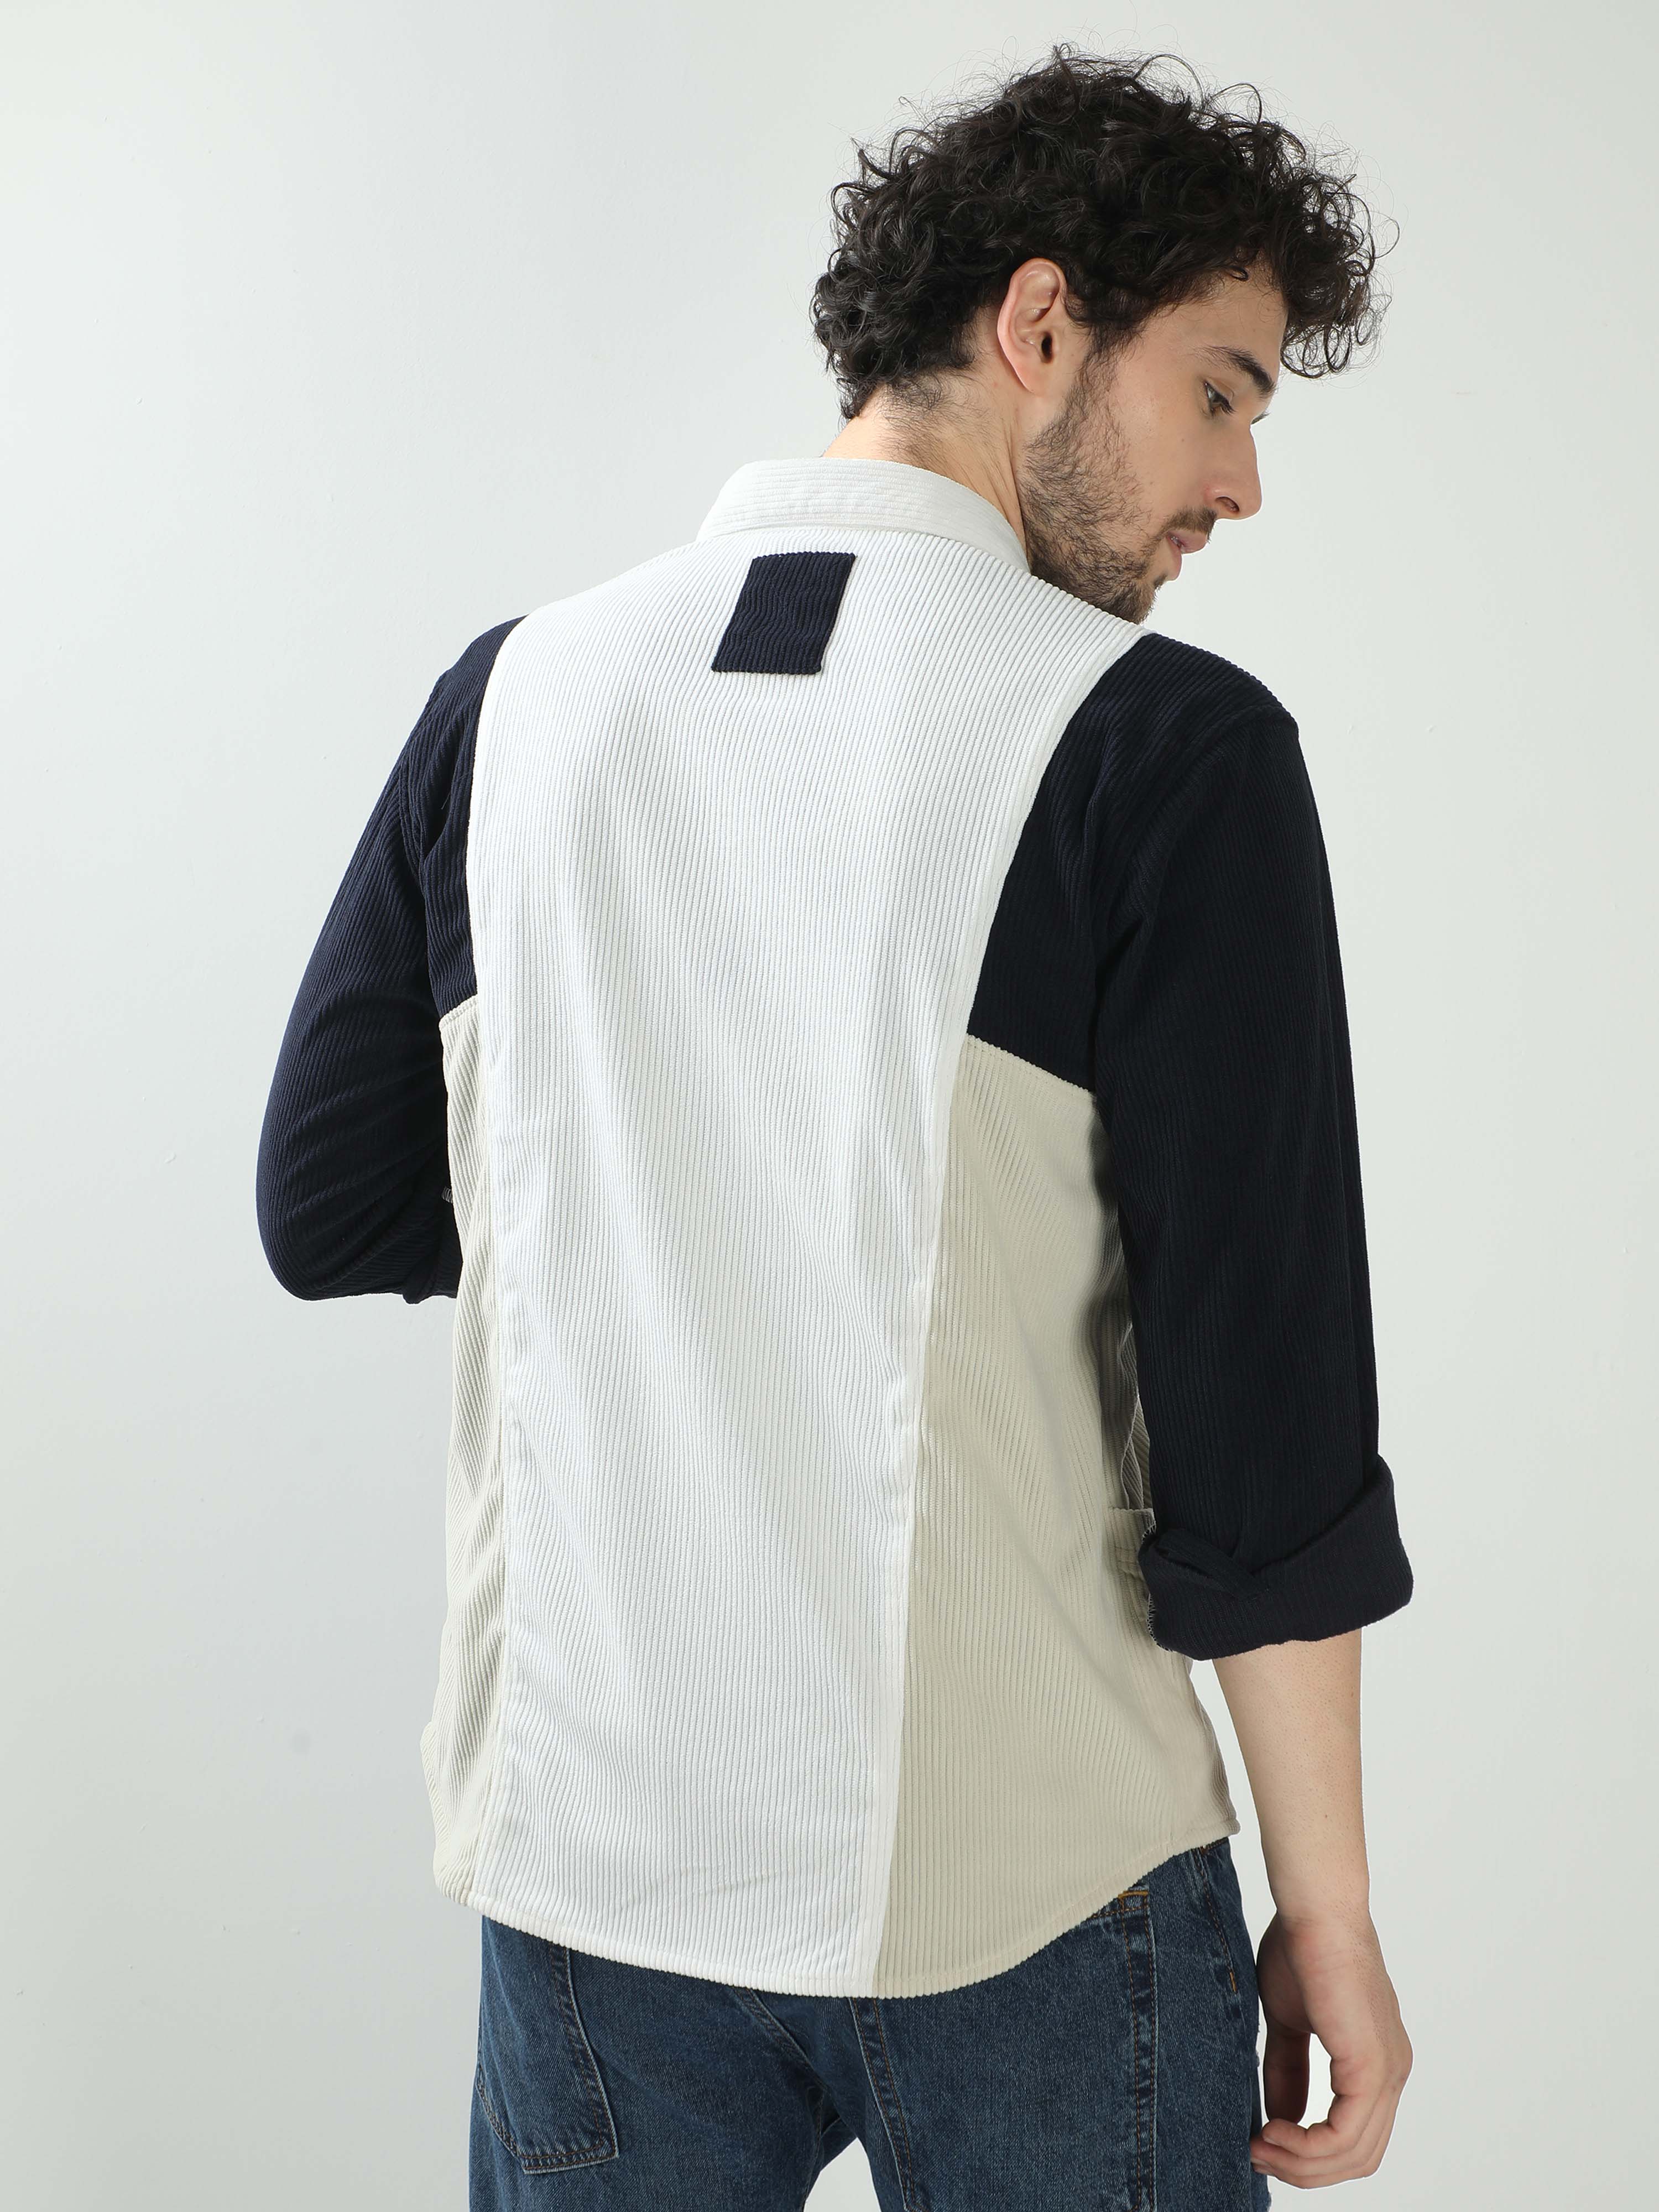 Shop Latest Double Pocket White Corduroy Shirt OnlineRs. 1599.00